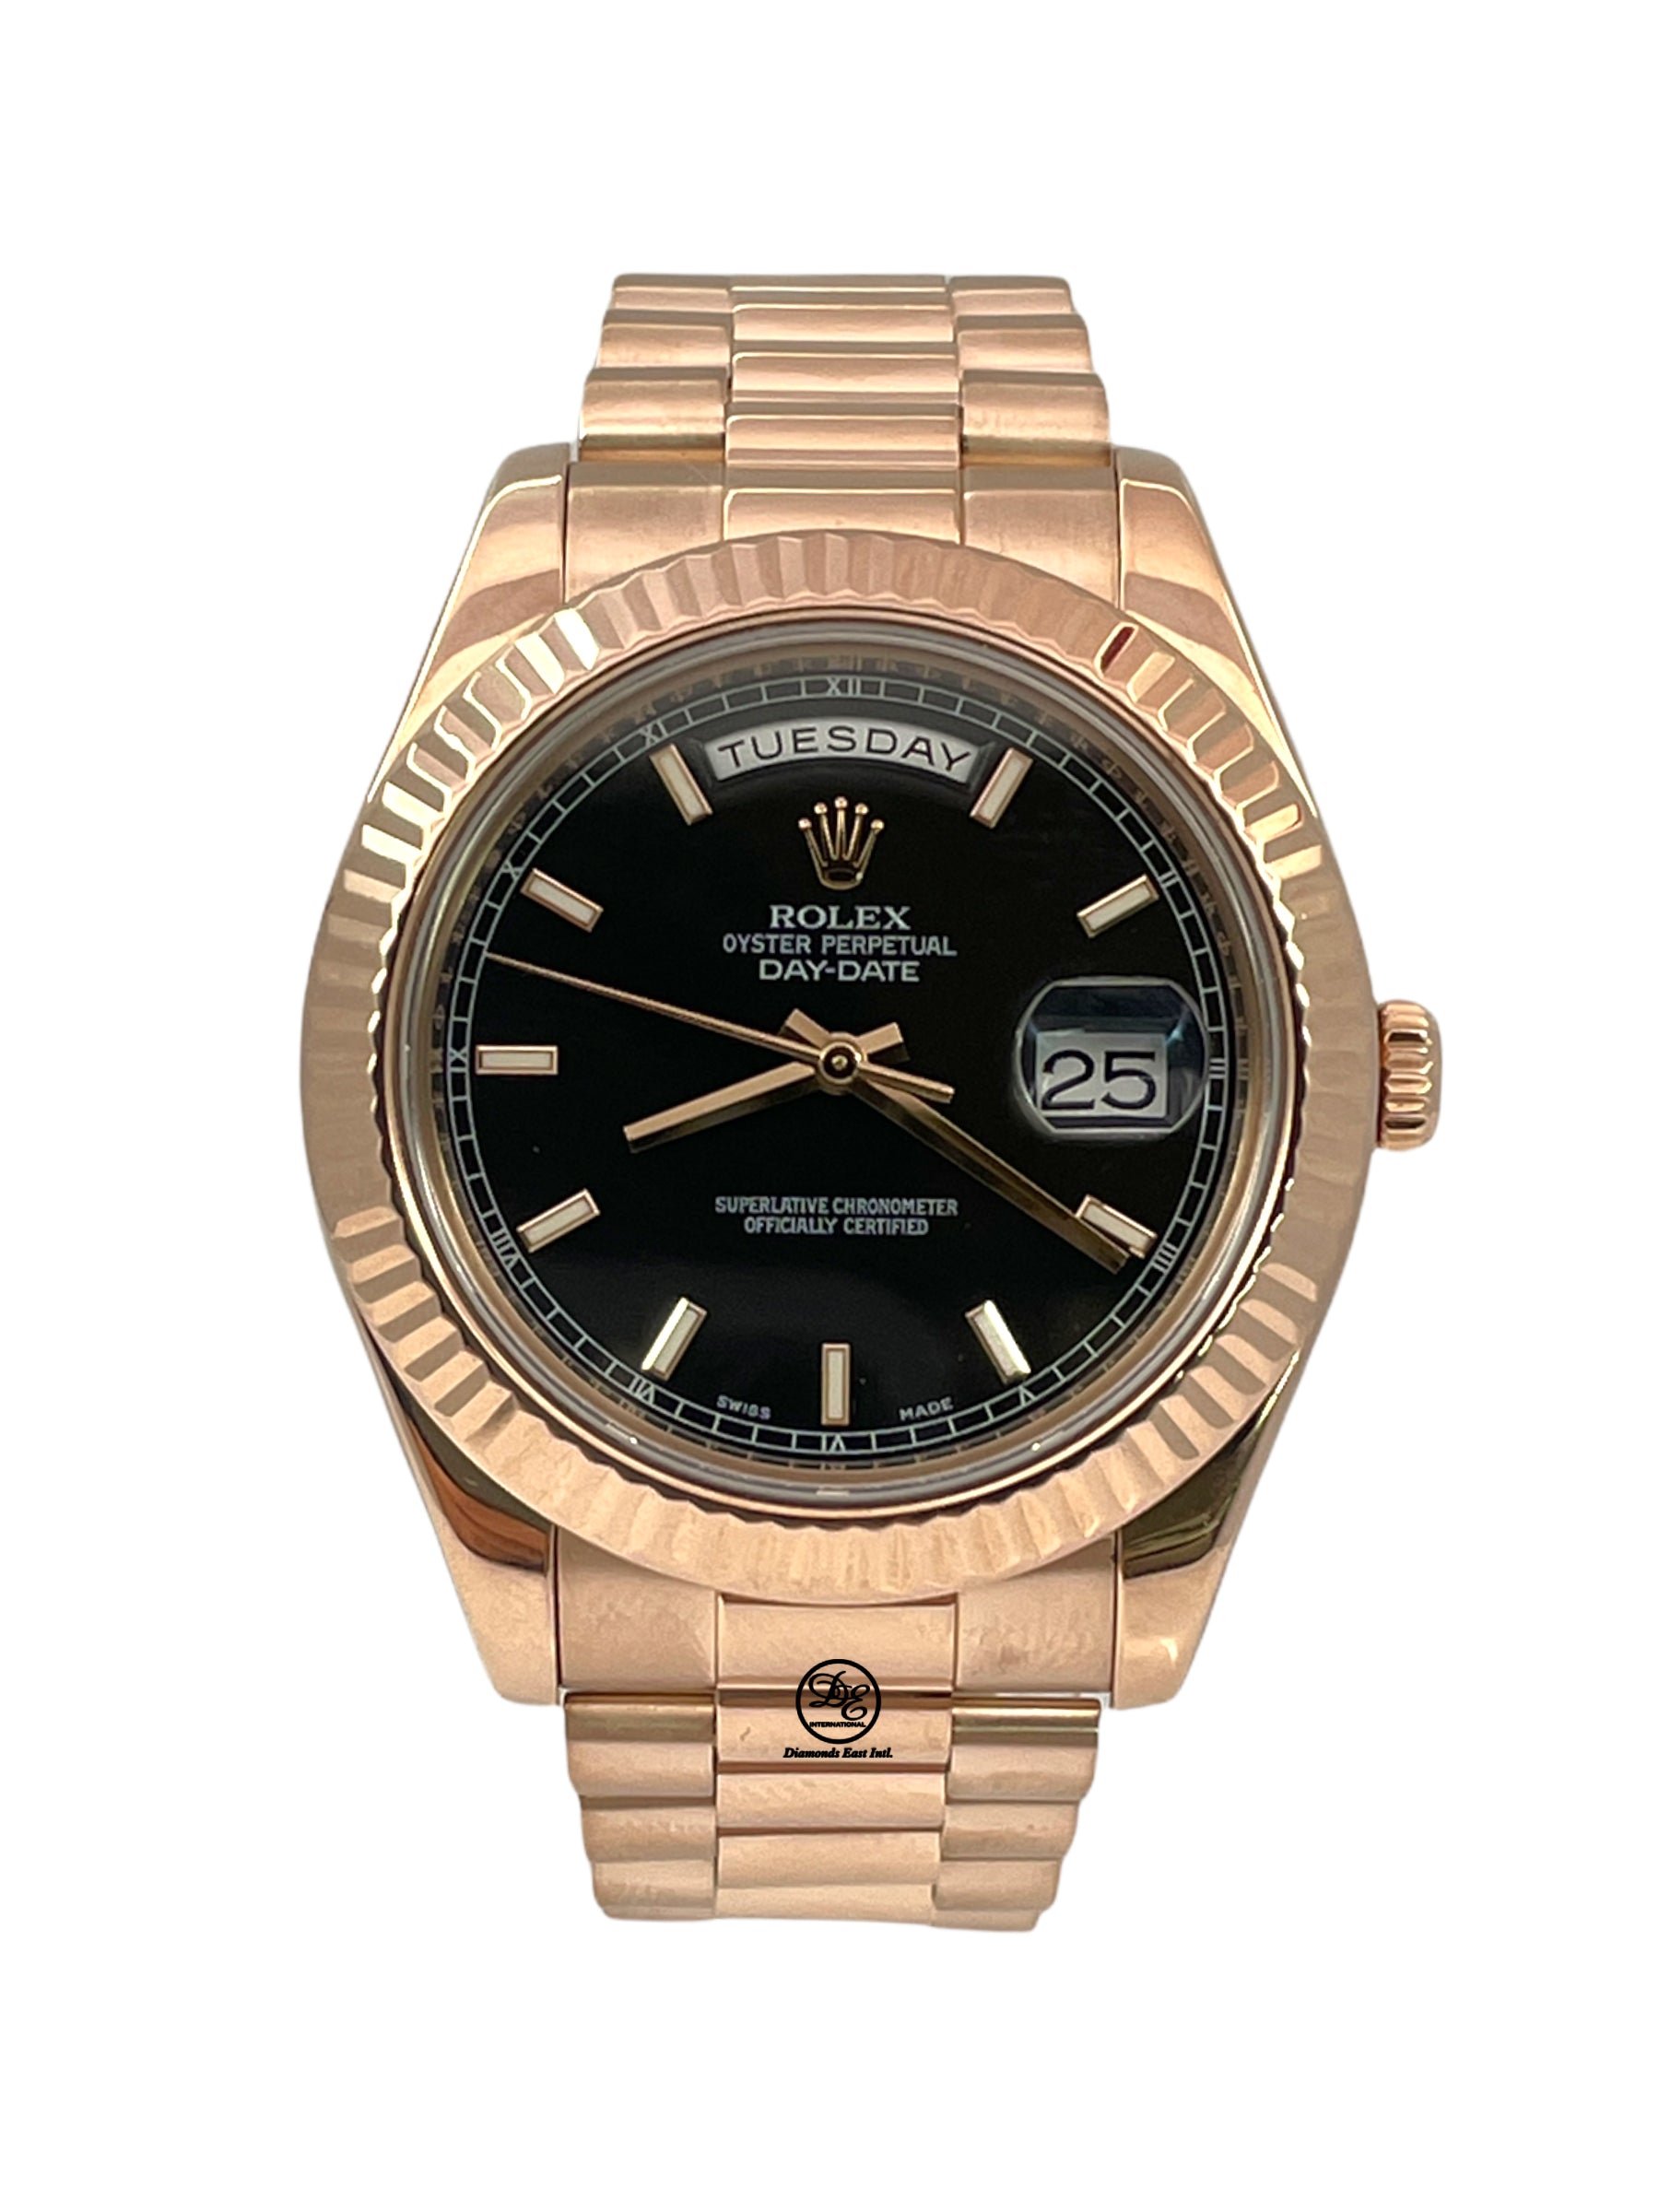 Rolex Day-Date 41 Rose Gold Watch 218235